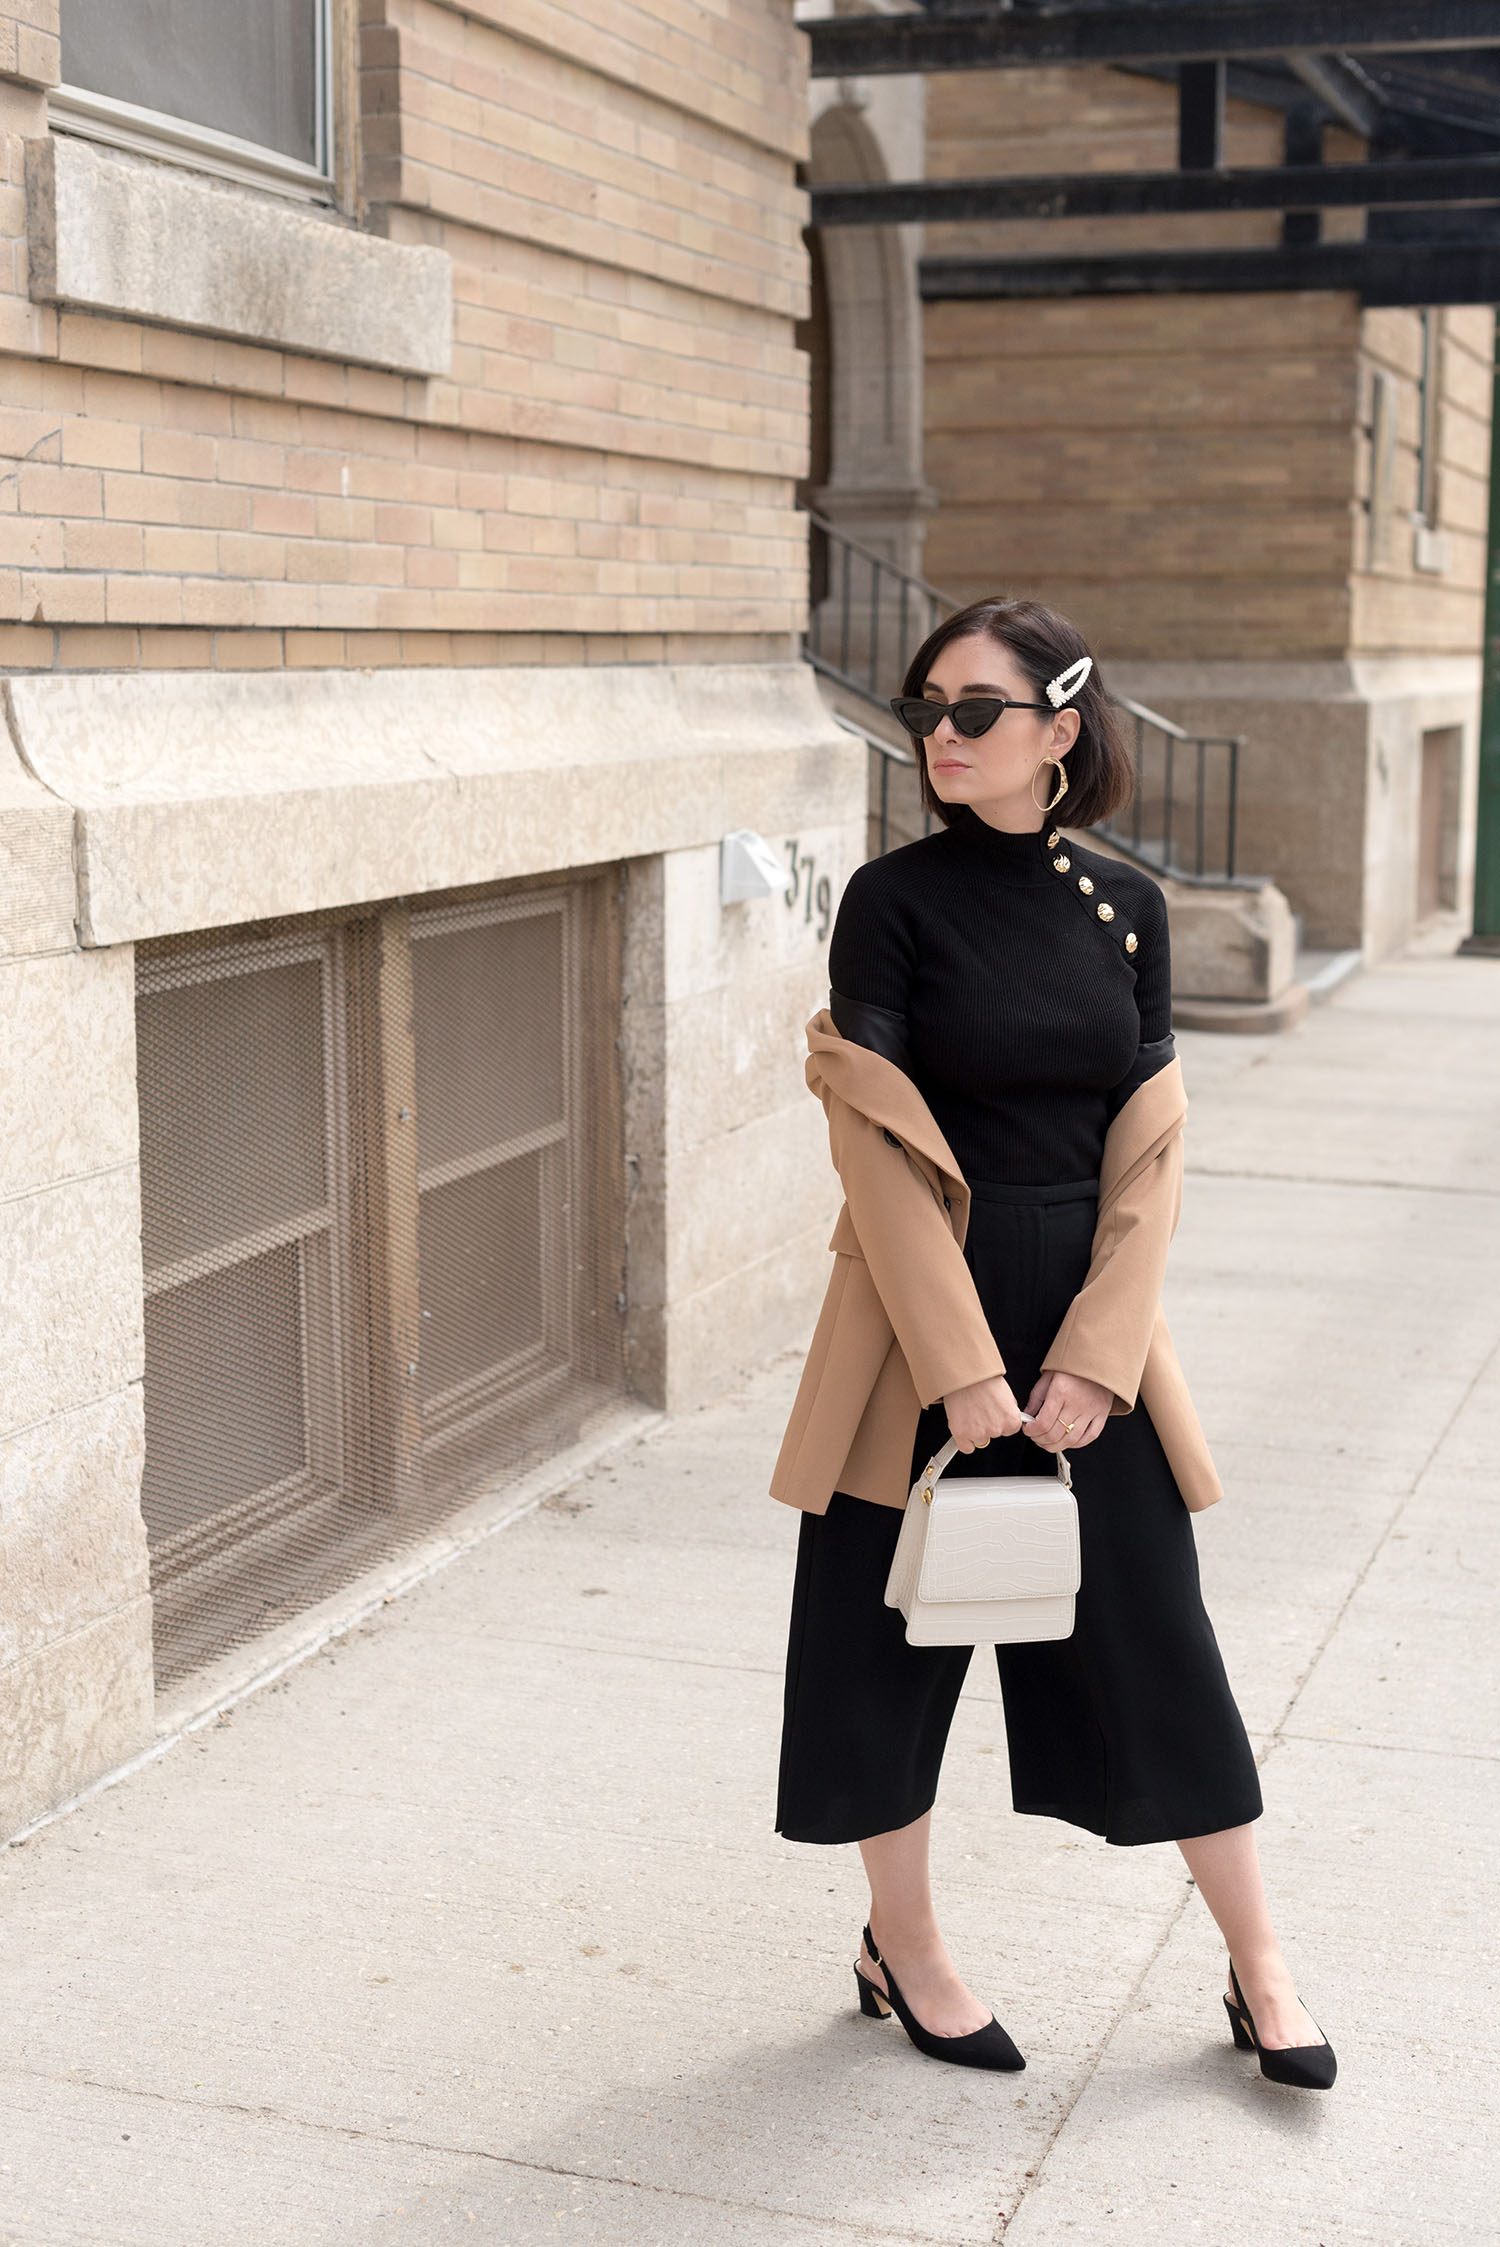 Top Canadian fashion blogger Cee Fardoe of Coco & Vera wears a Zara camel blazer and carries a Friday by JW Pei vegan handbag